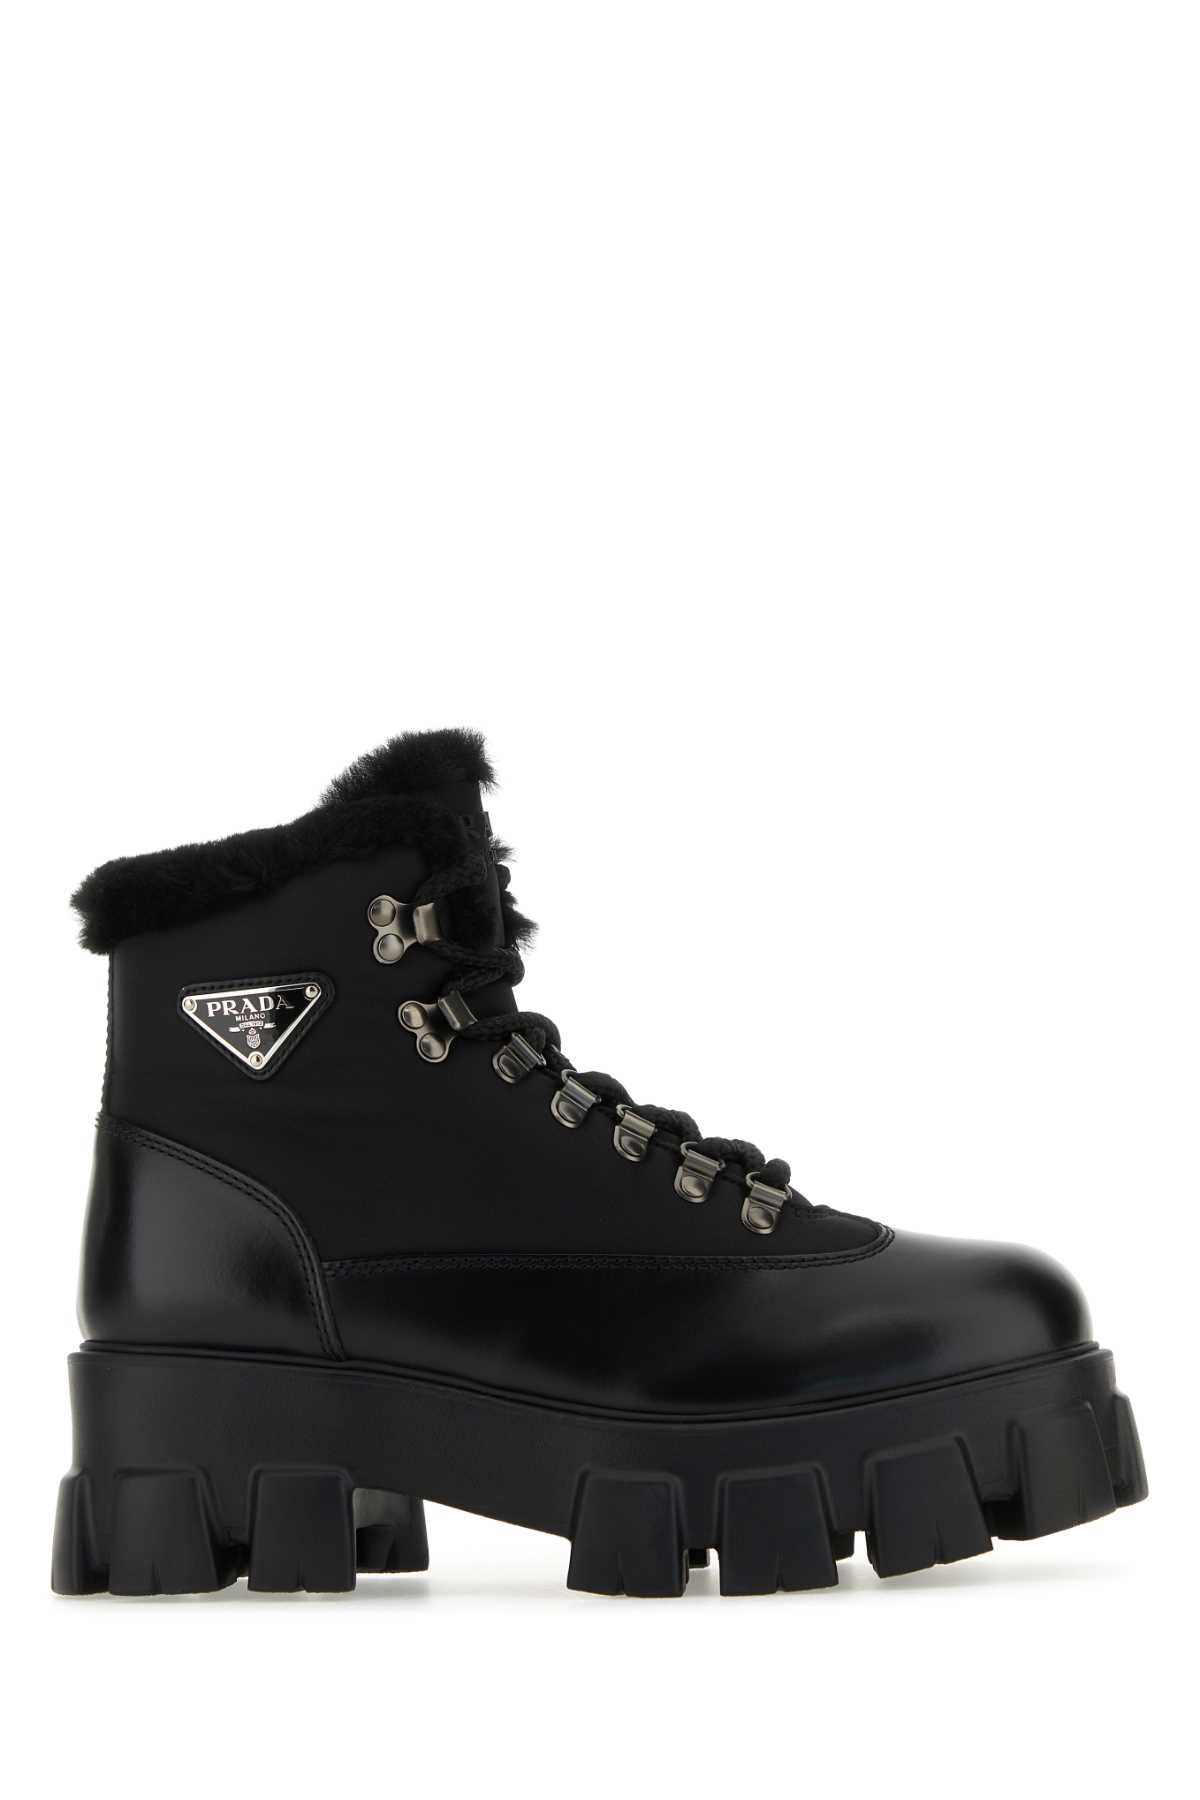 Prada Black Leather And Nylon Monolith Ankle Boots